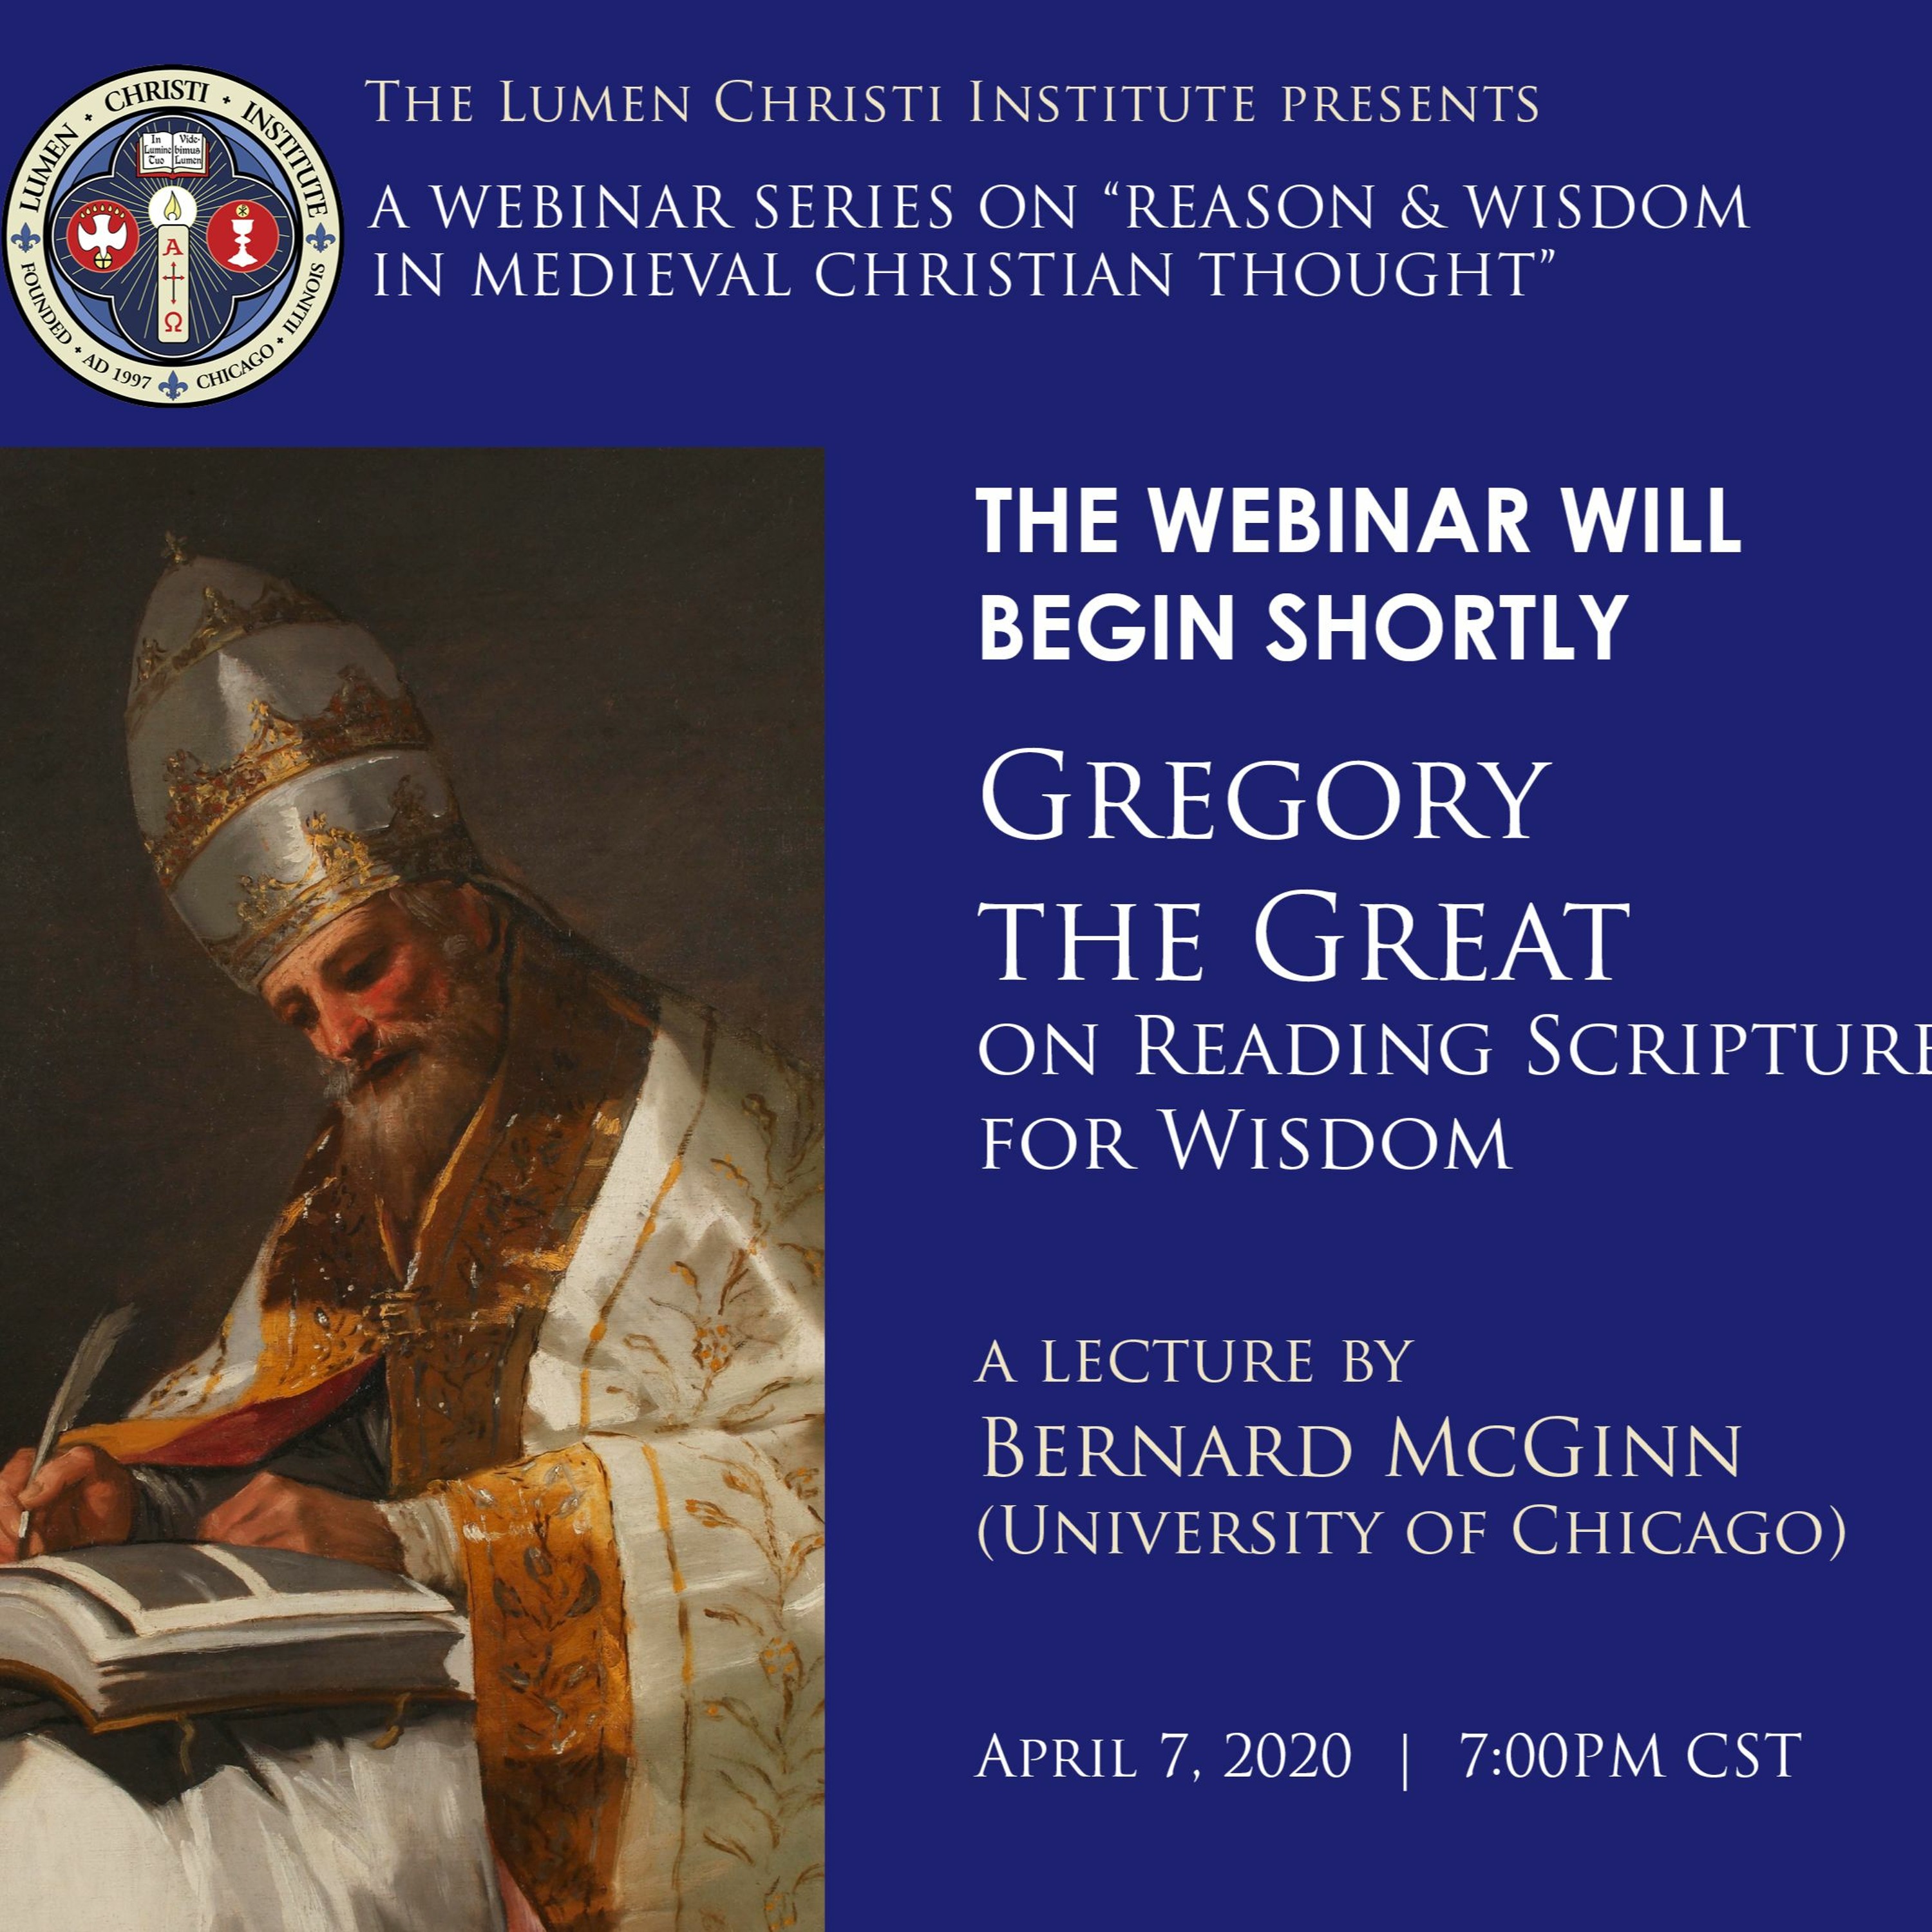 Bernard McGinn - WEBINAR: Gregory the Great on Reading Scripture for Wisdom